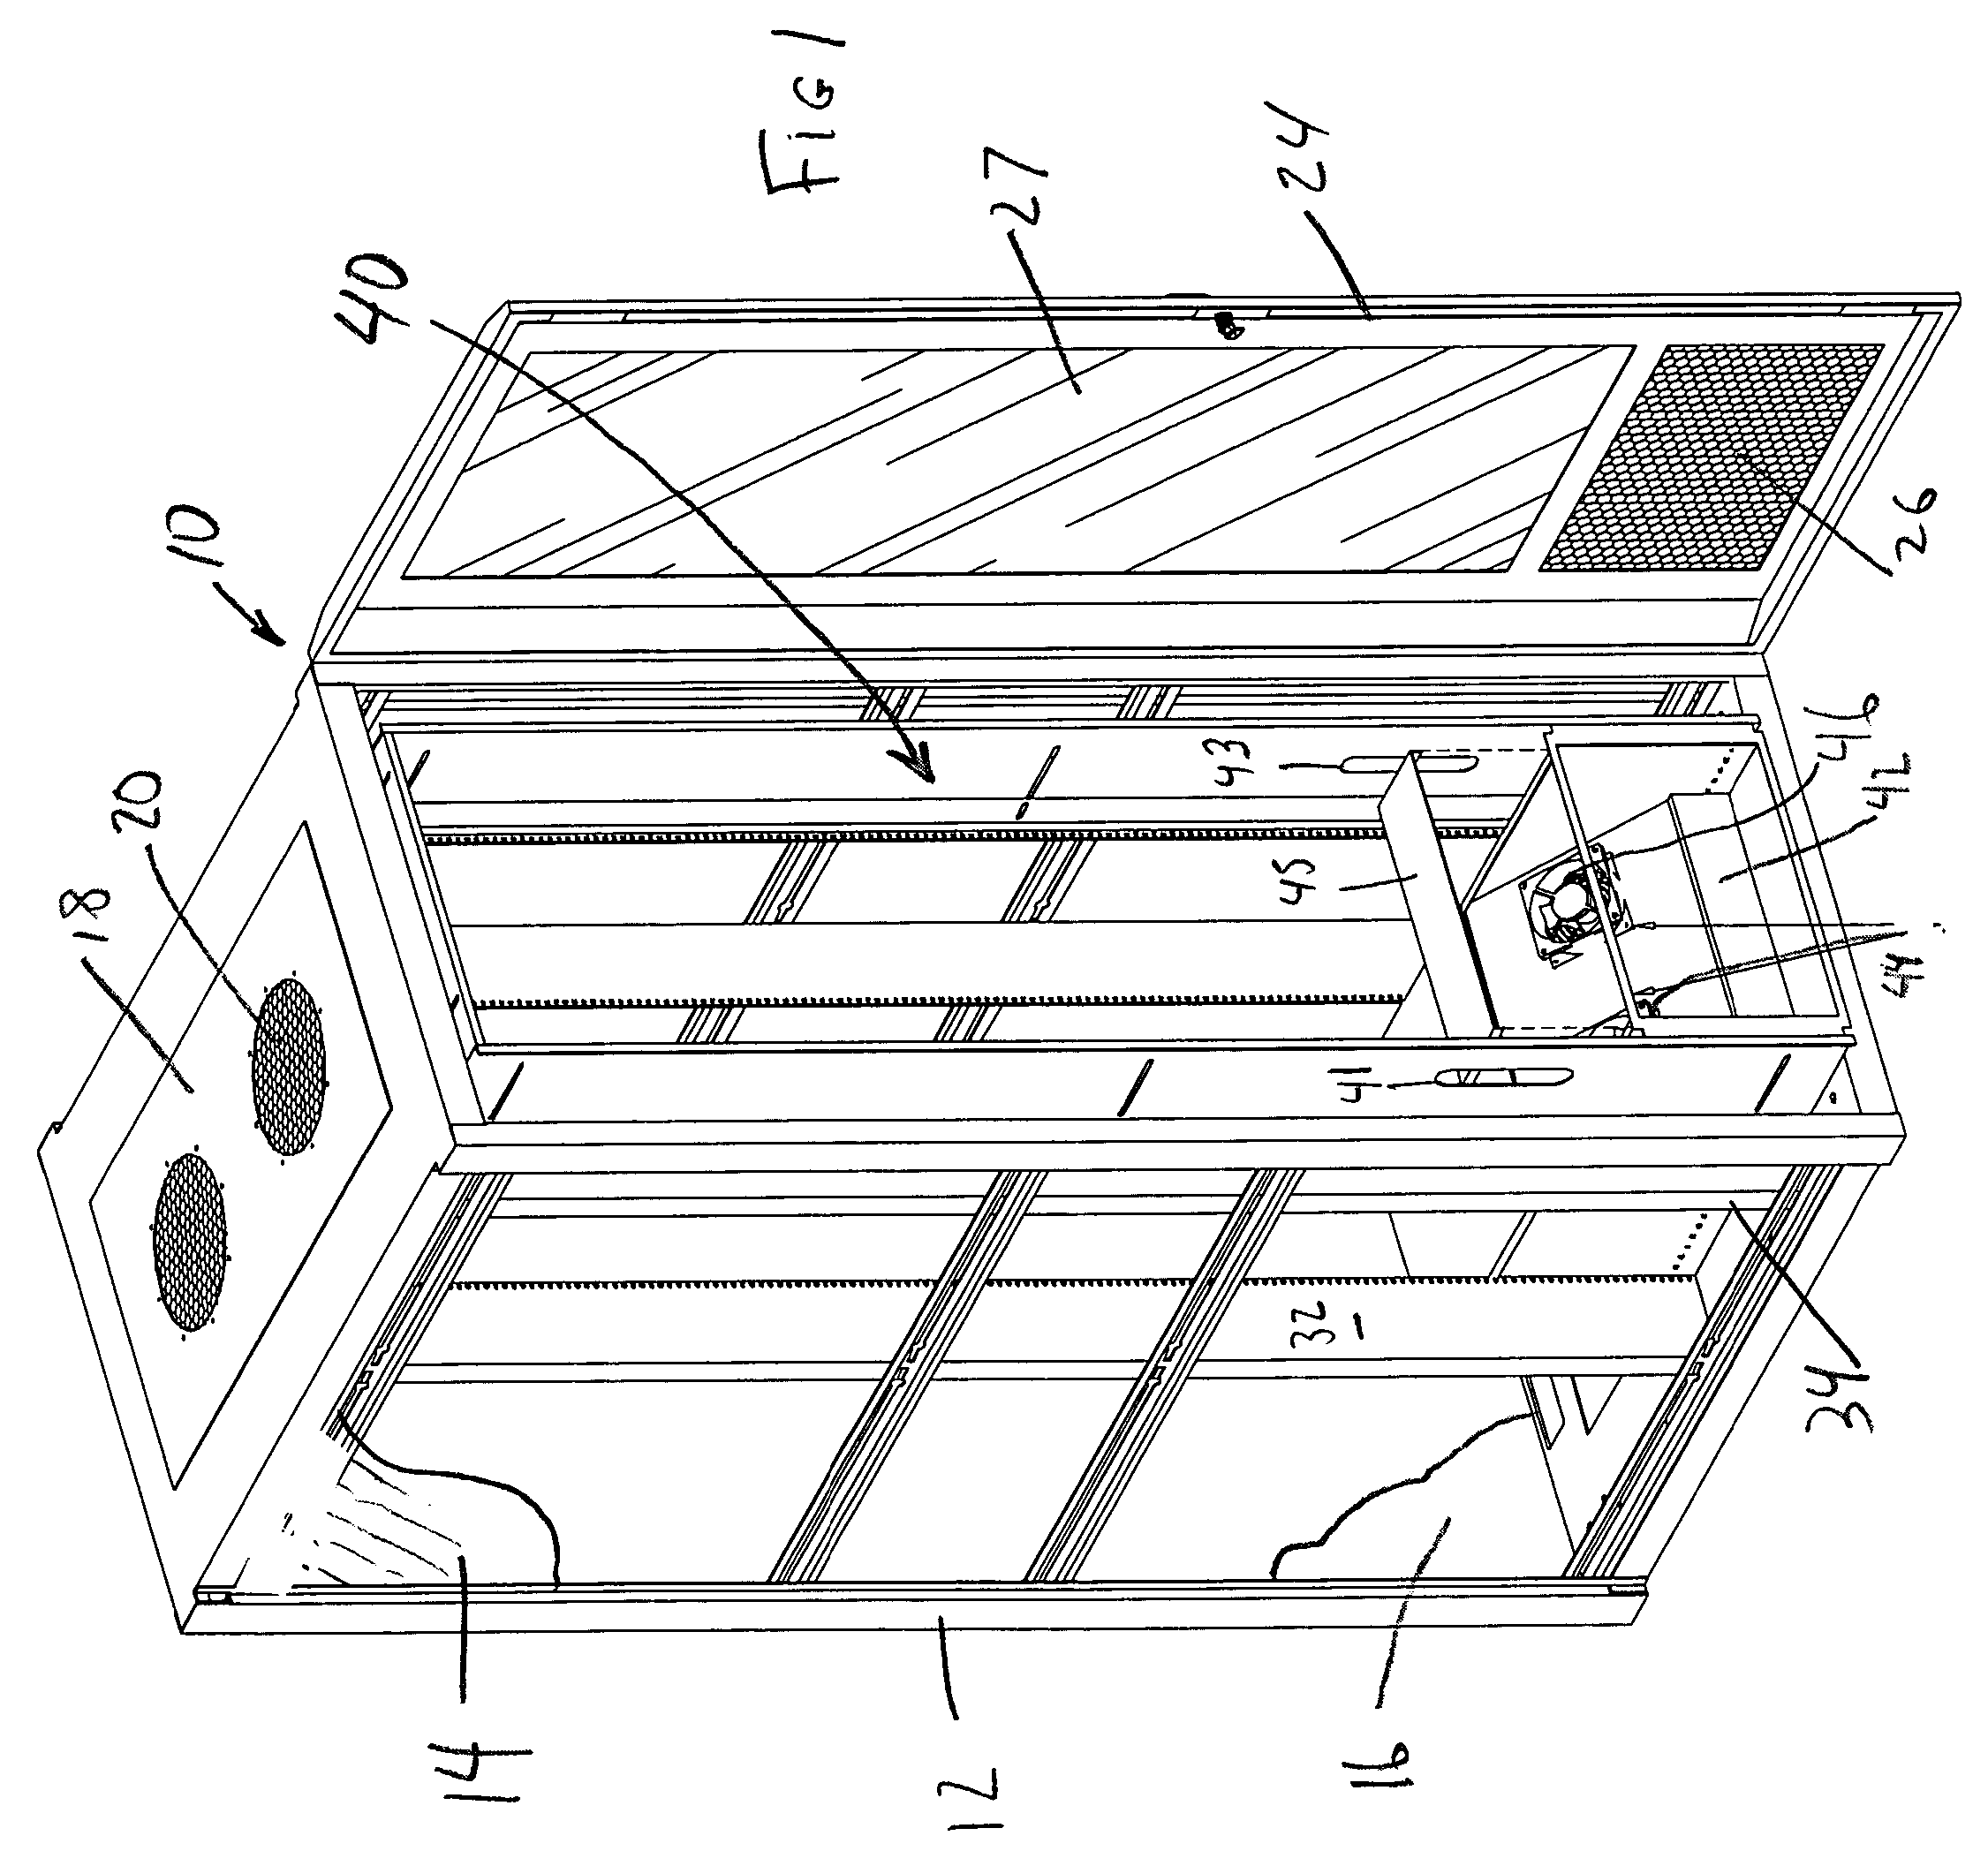 Air distribution arrangement for rack-mounted equipment